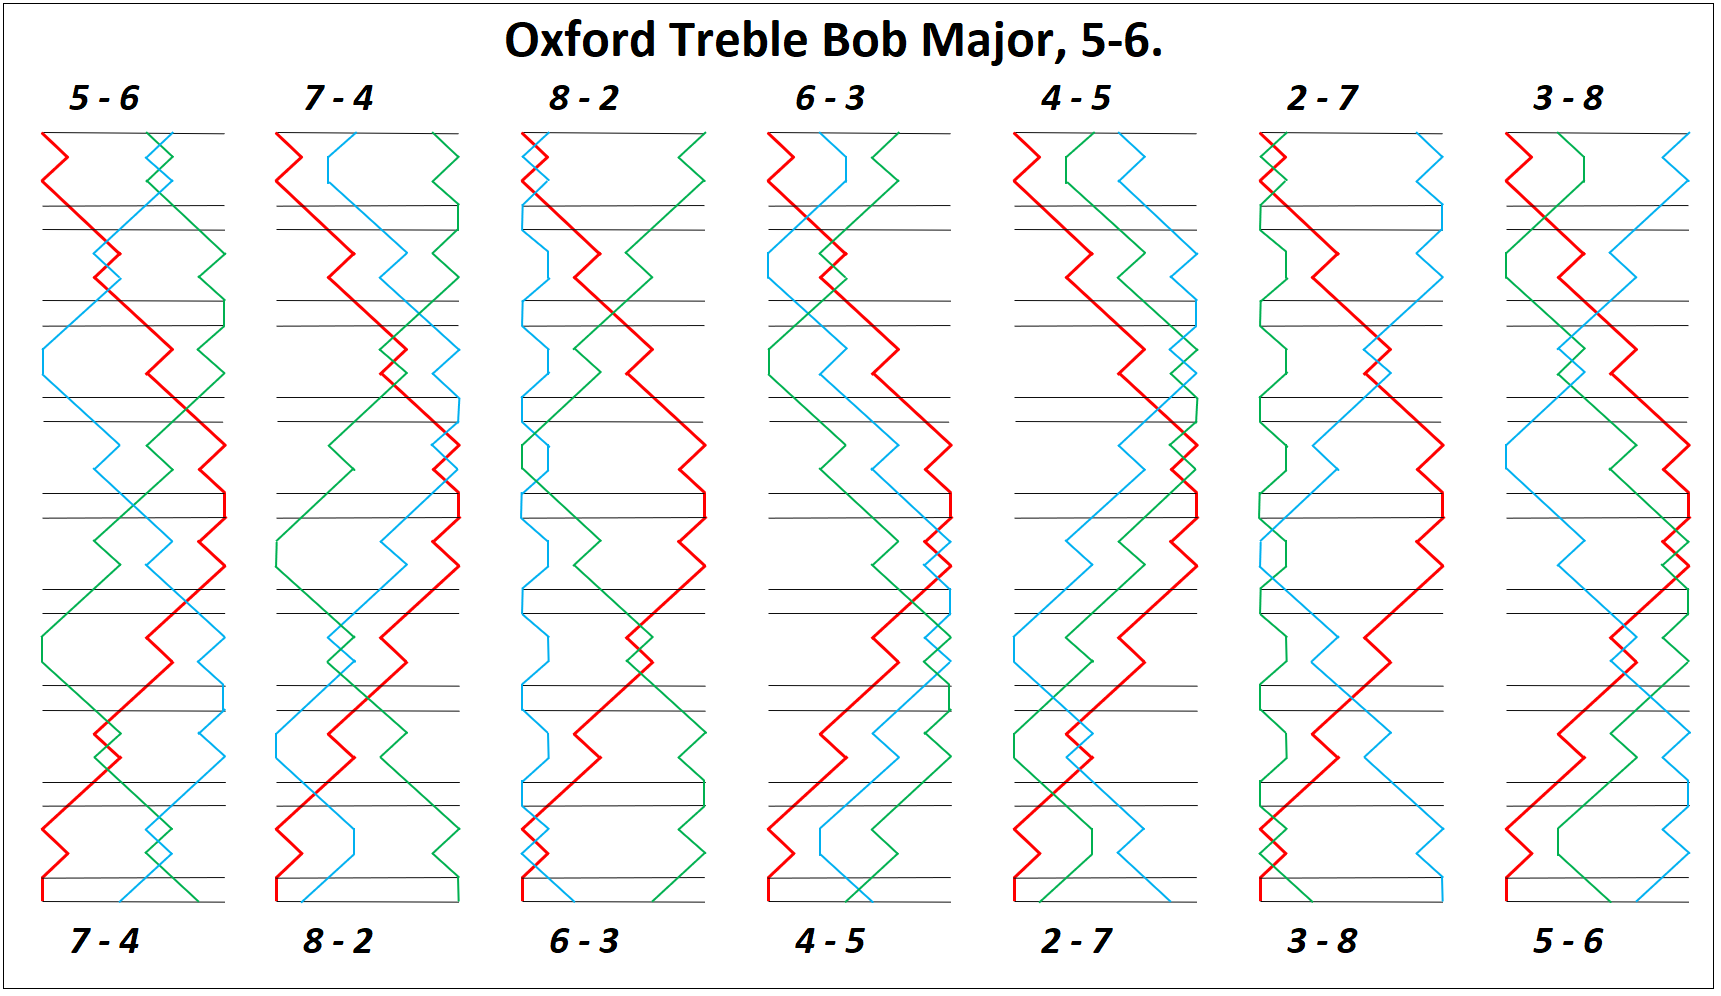 Oxford Treble Bob Major Double line for 5-6